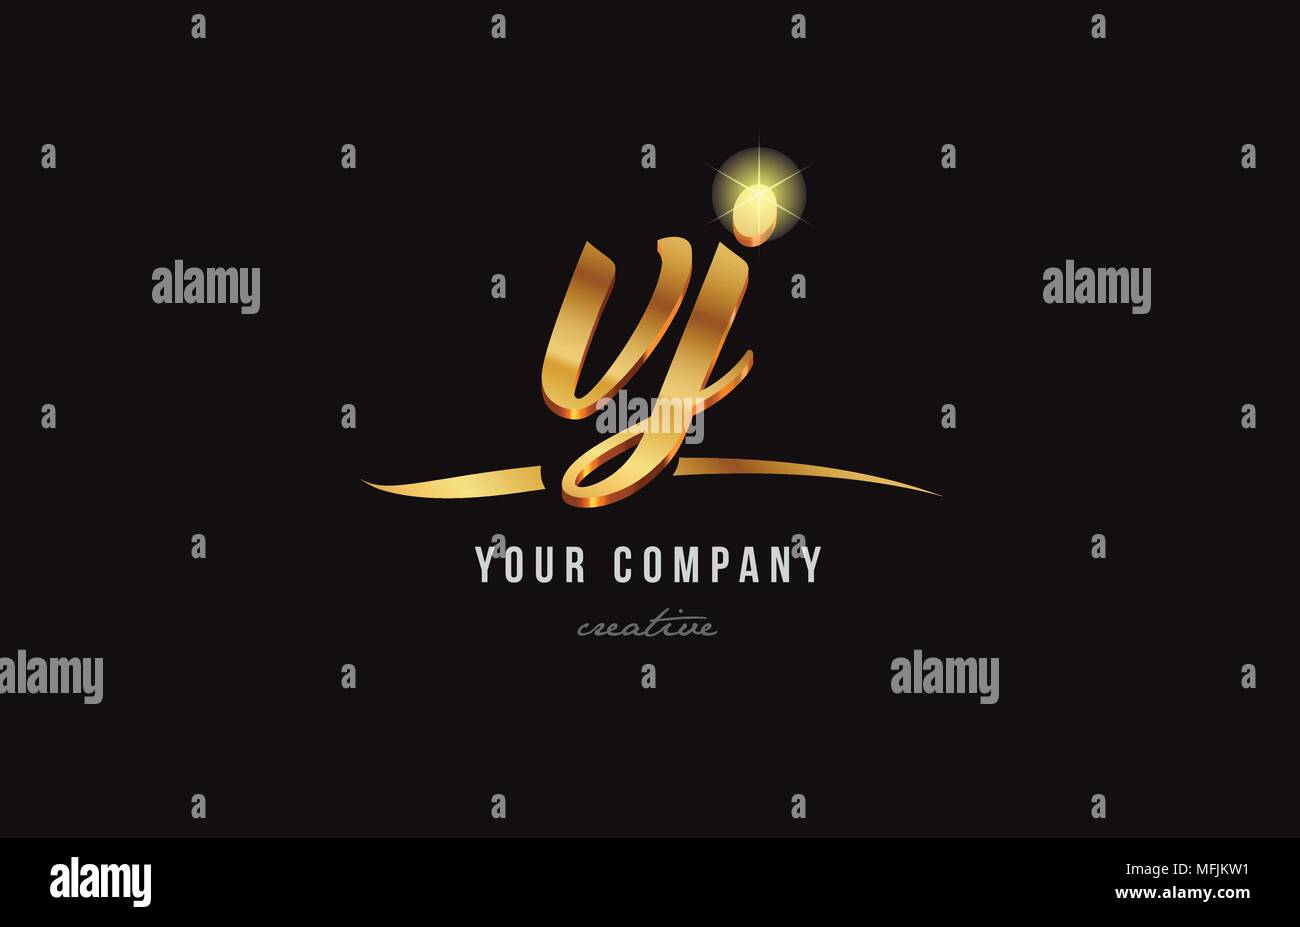 gold golden alphabet letter vj v j logo combination design suitable for a company or business Stock Vector